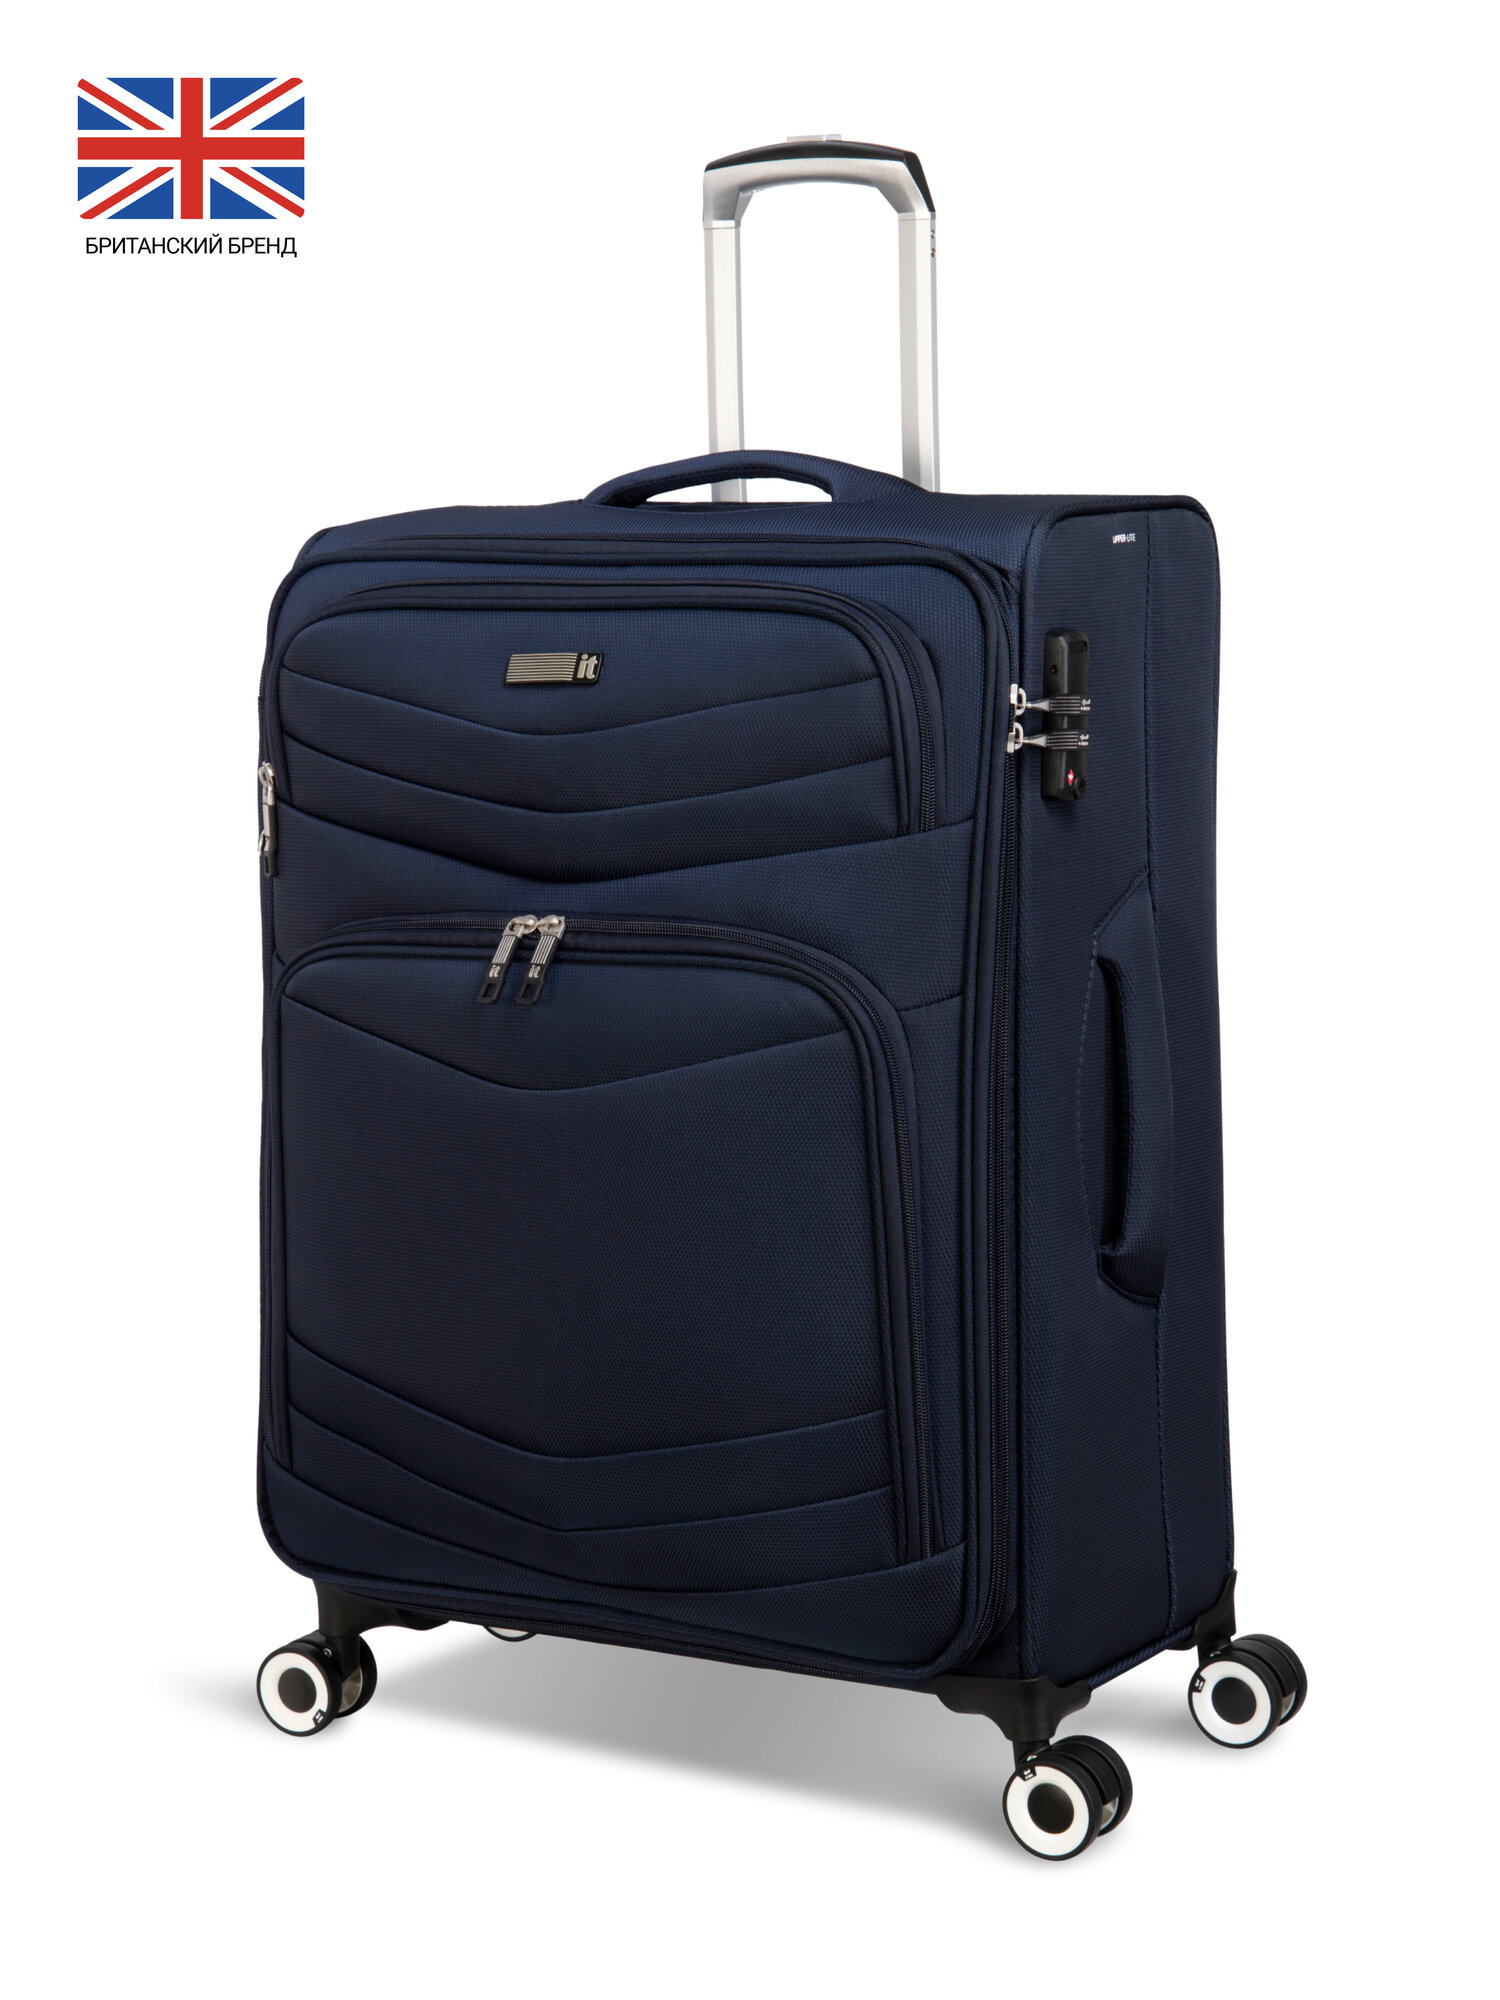 Средний чемодан it luggage, модель Intrepid, размер М, текстиль, 93 л, 68 см